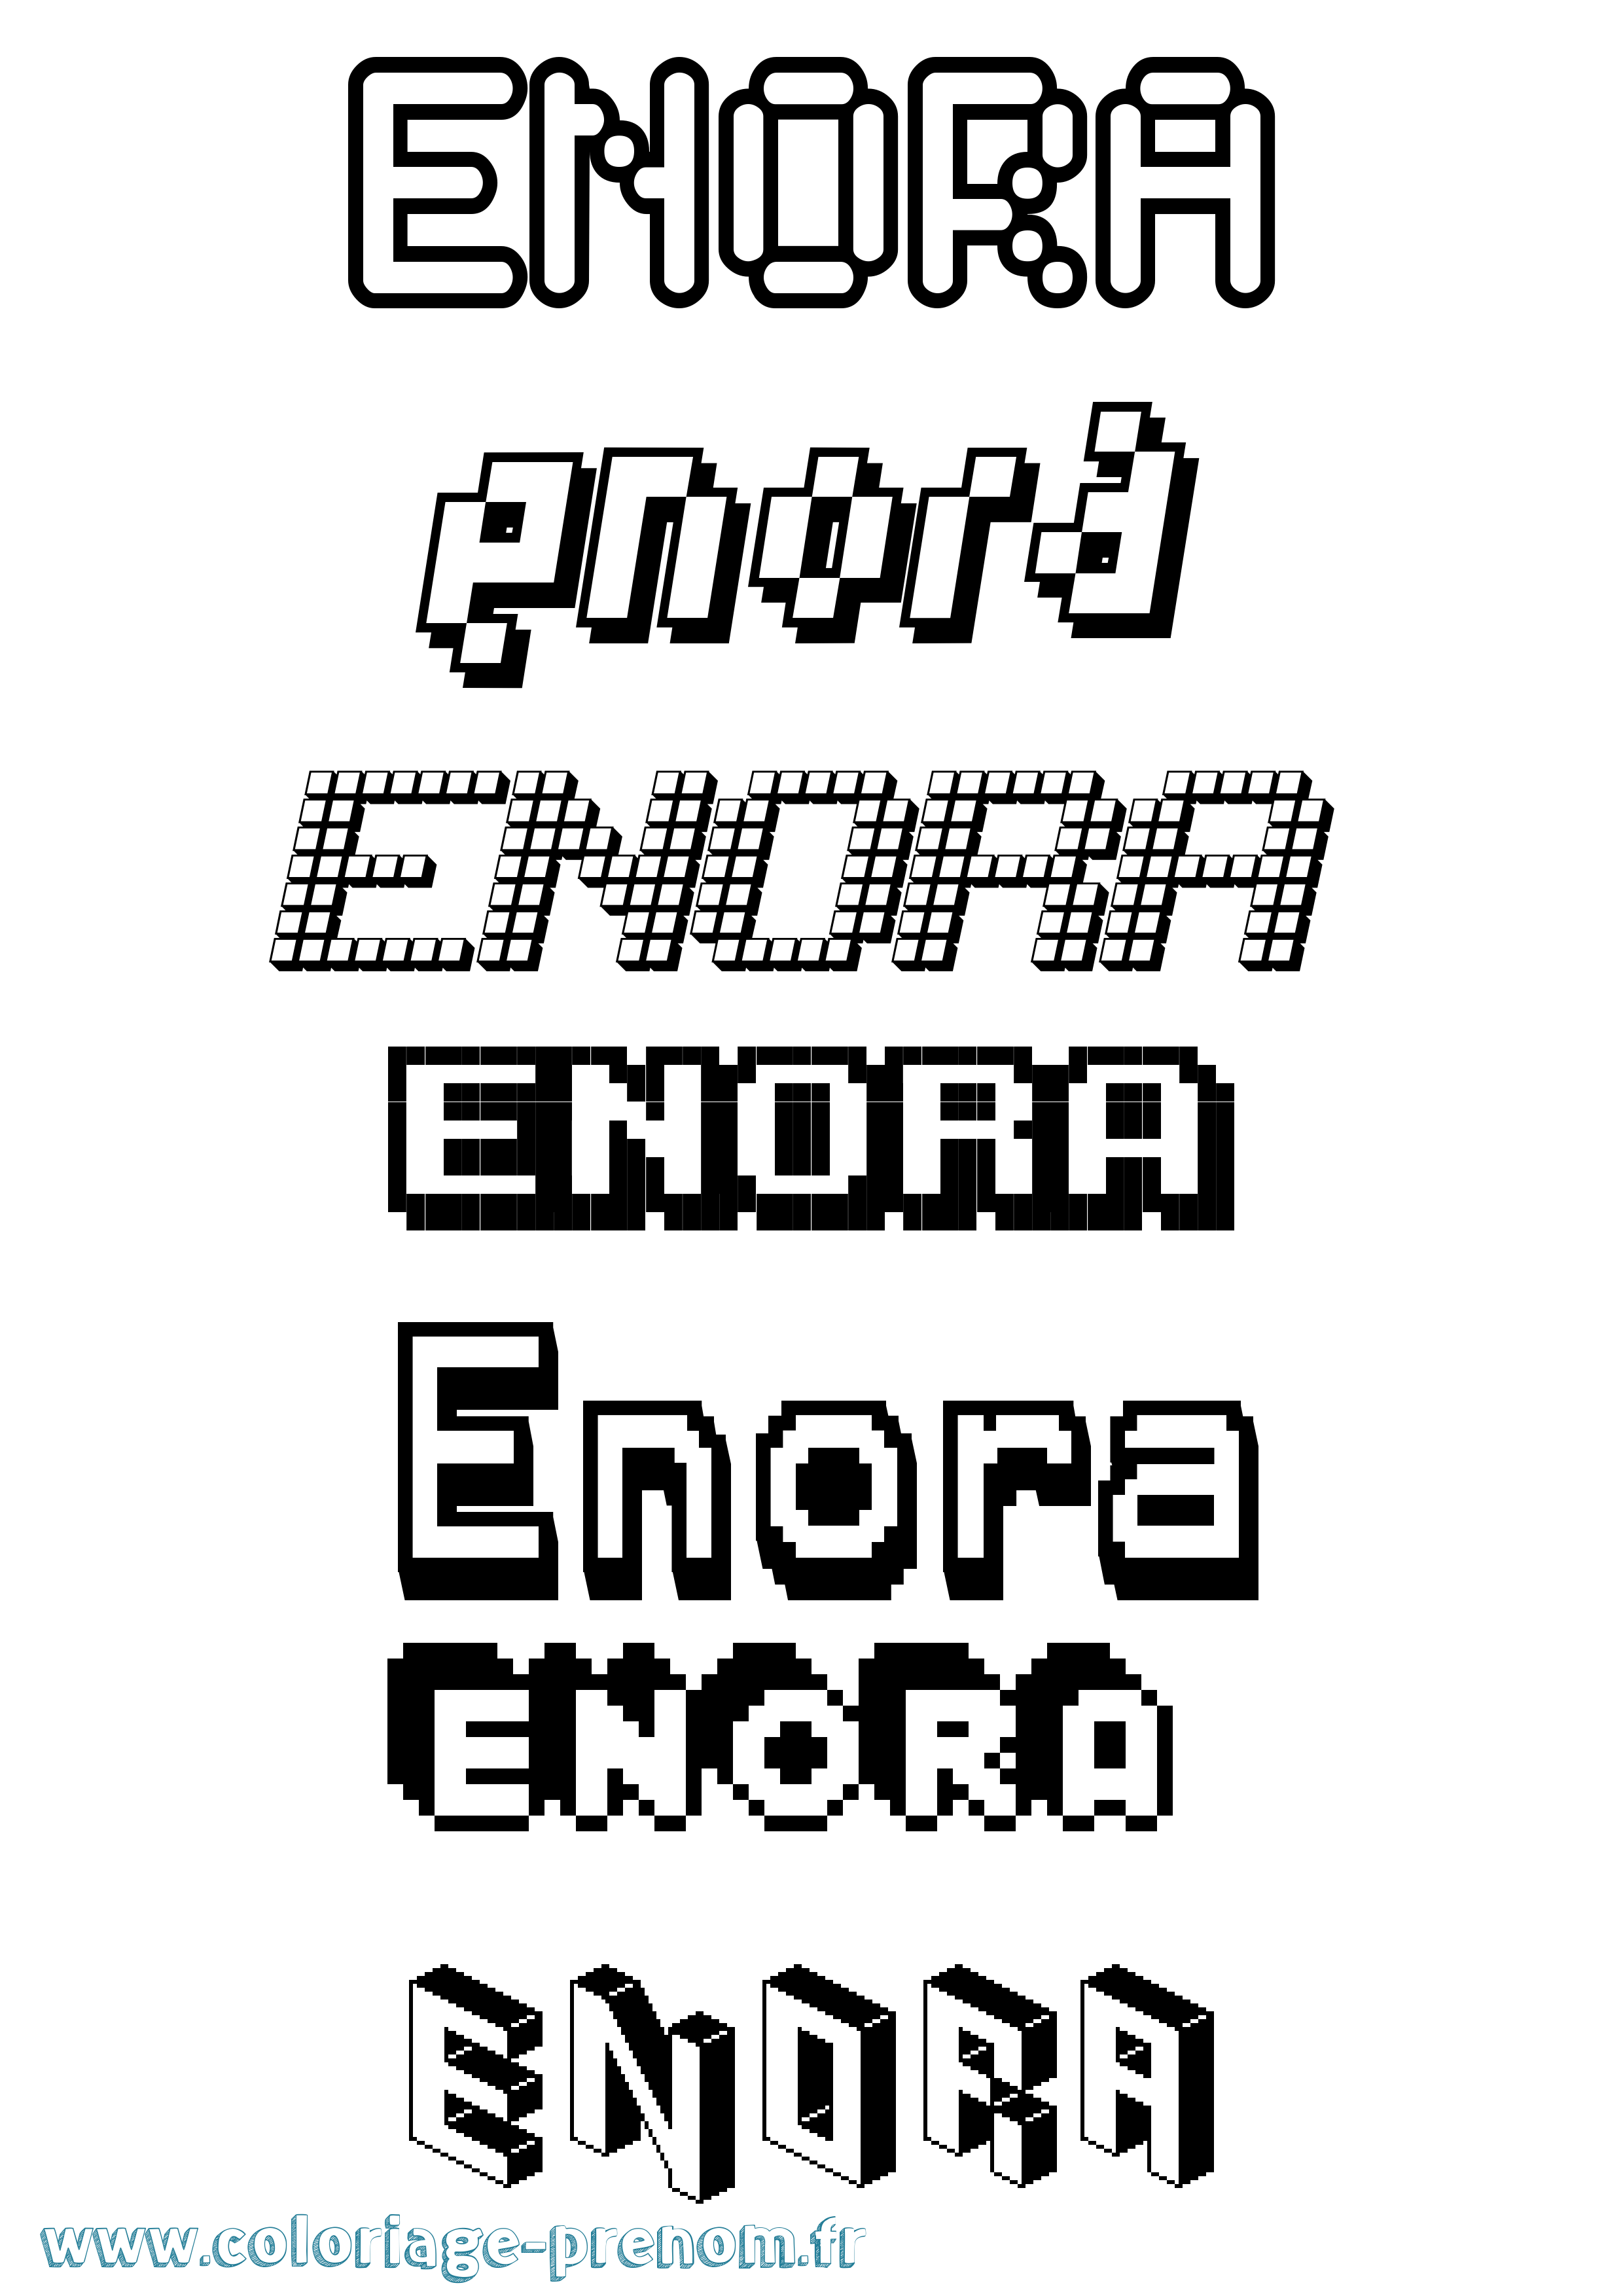 Coloriage prénom Enora